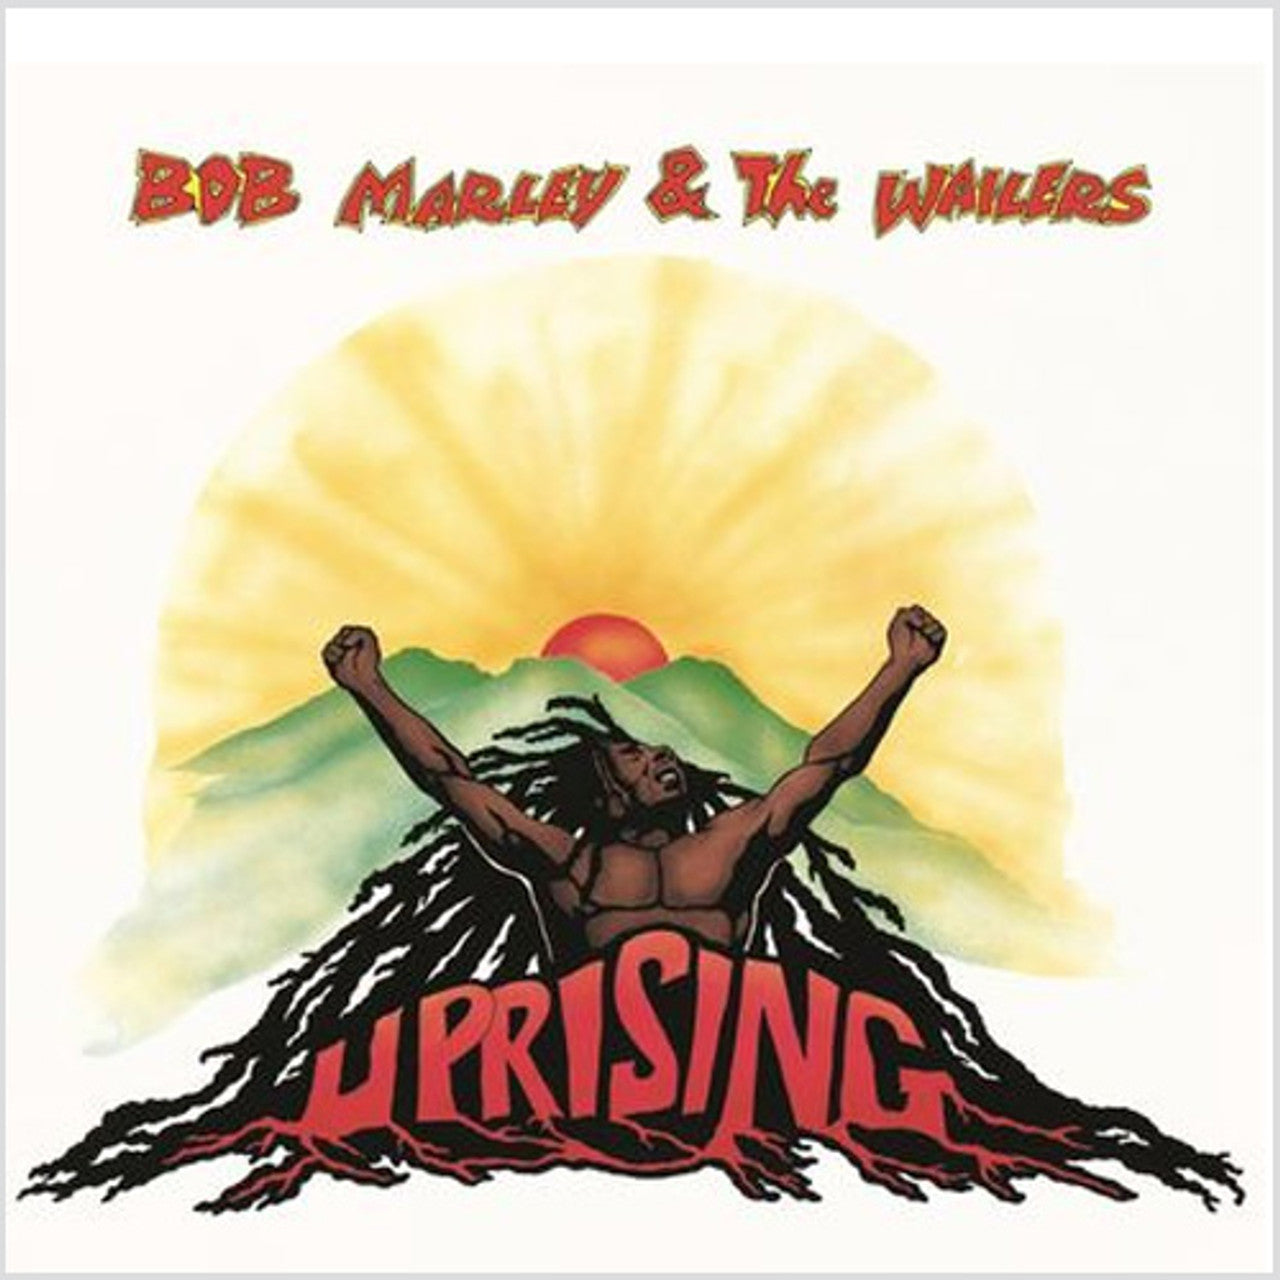 Bob Marley &amp; the Wailers - Uprising - Tuff Gong LP